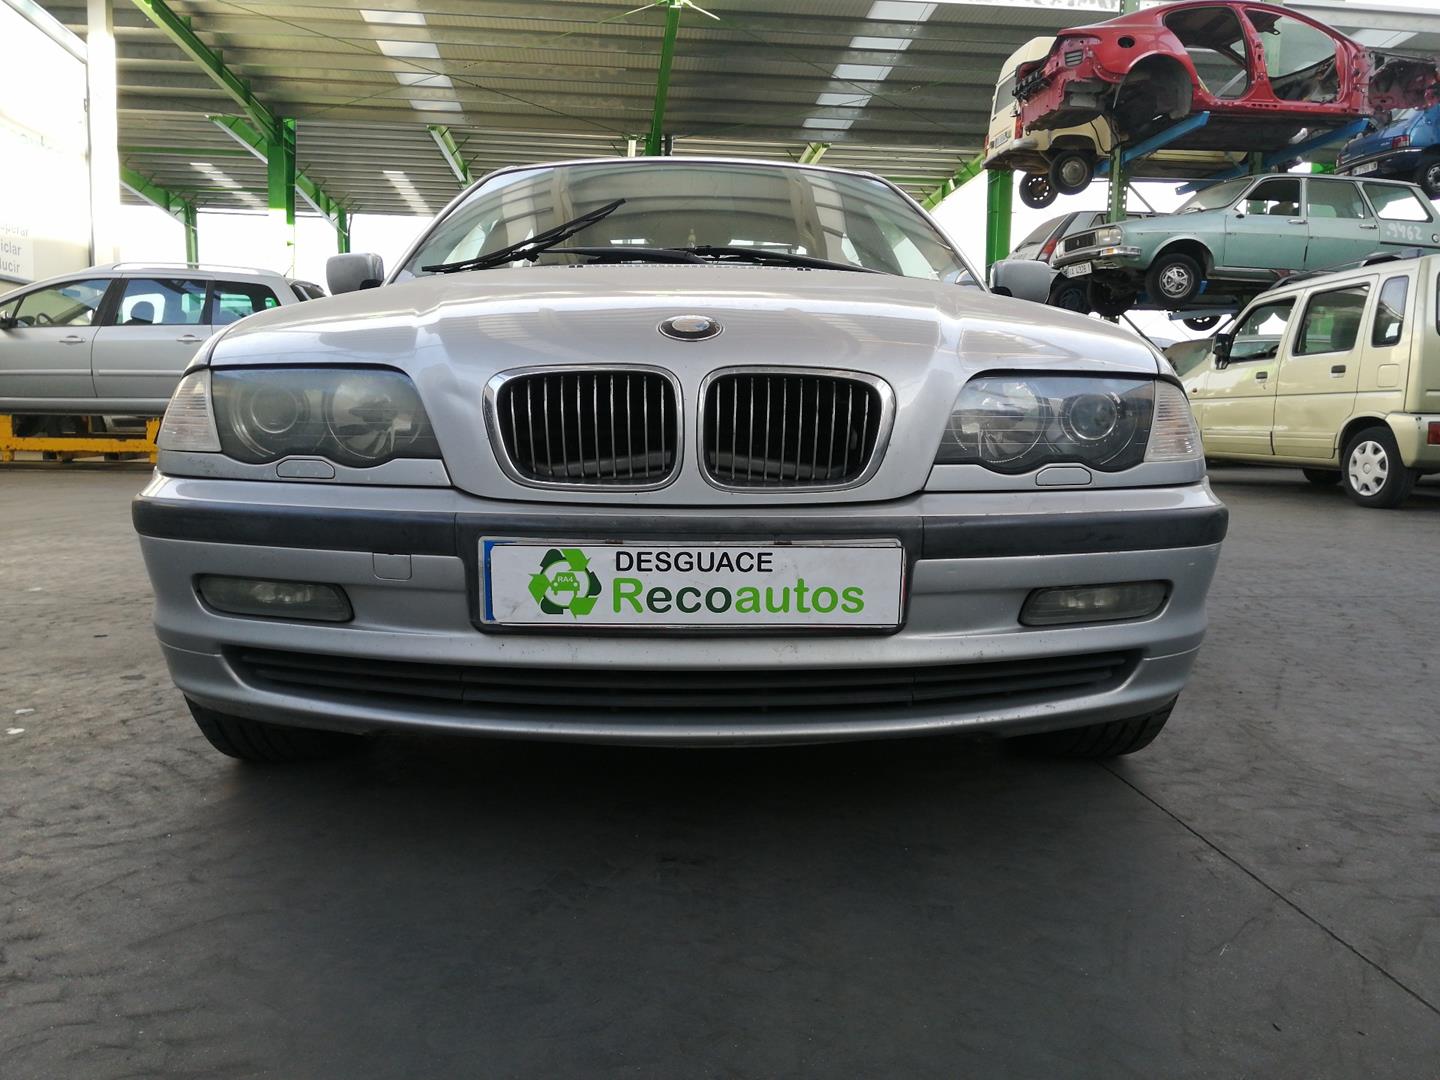 BMW 3 Series E46 (1997-2006) Headlight Switch Control Unit 8363668, 61318376445 24203713